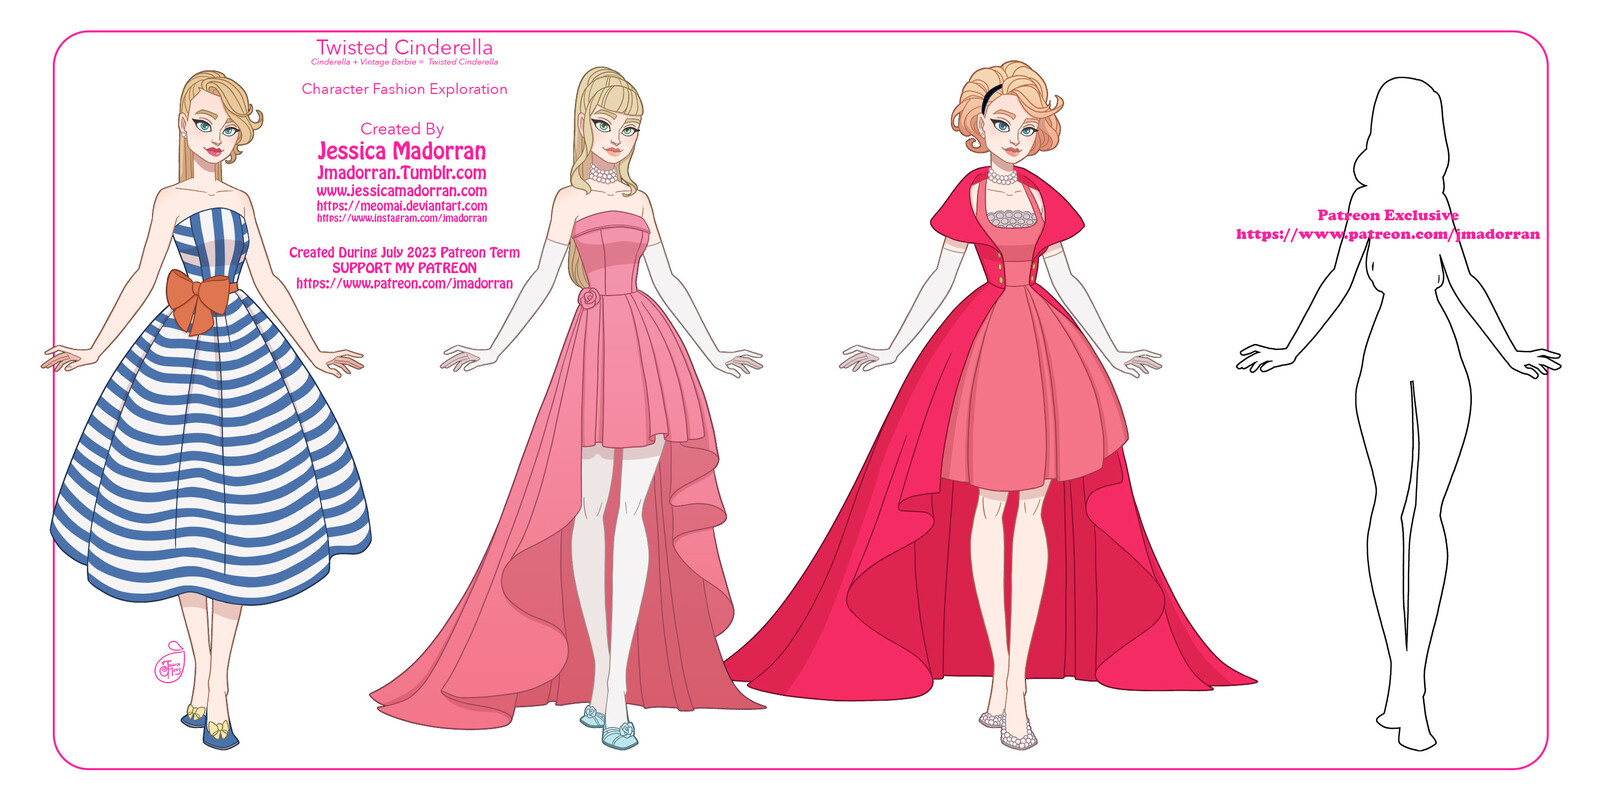 July 2023 Patreon - Twisted Cinderella Fashion Exploration